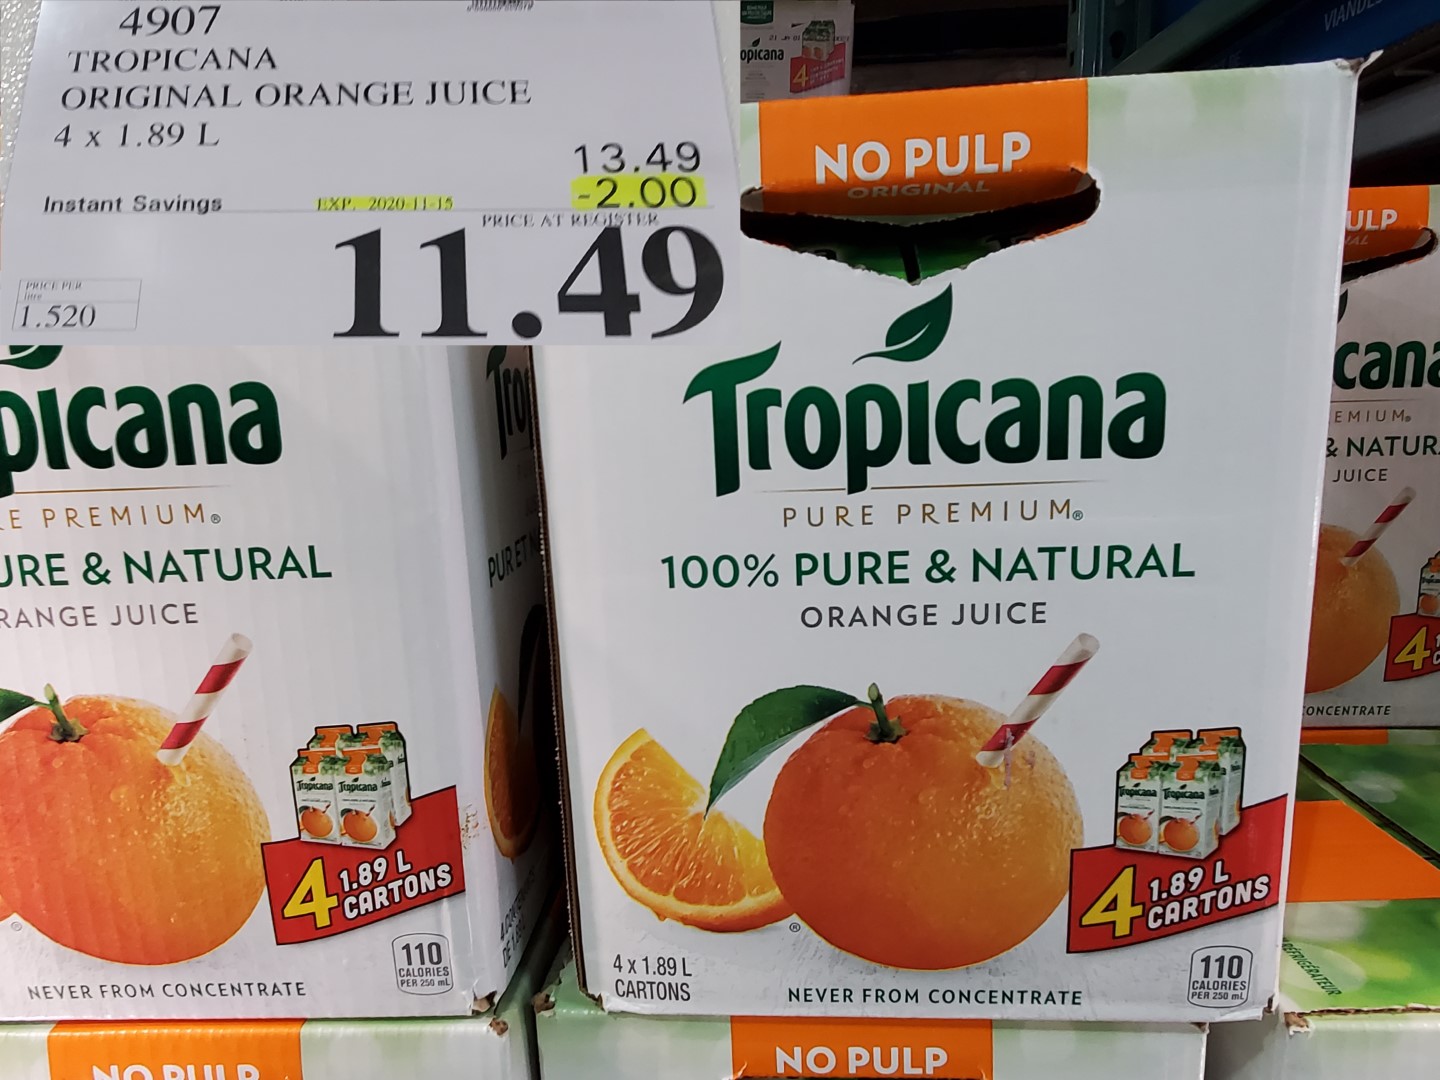 tropicana orange juice